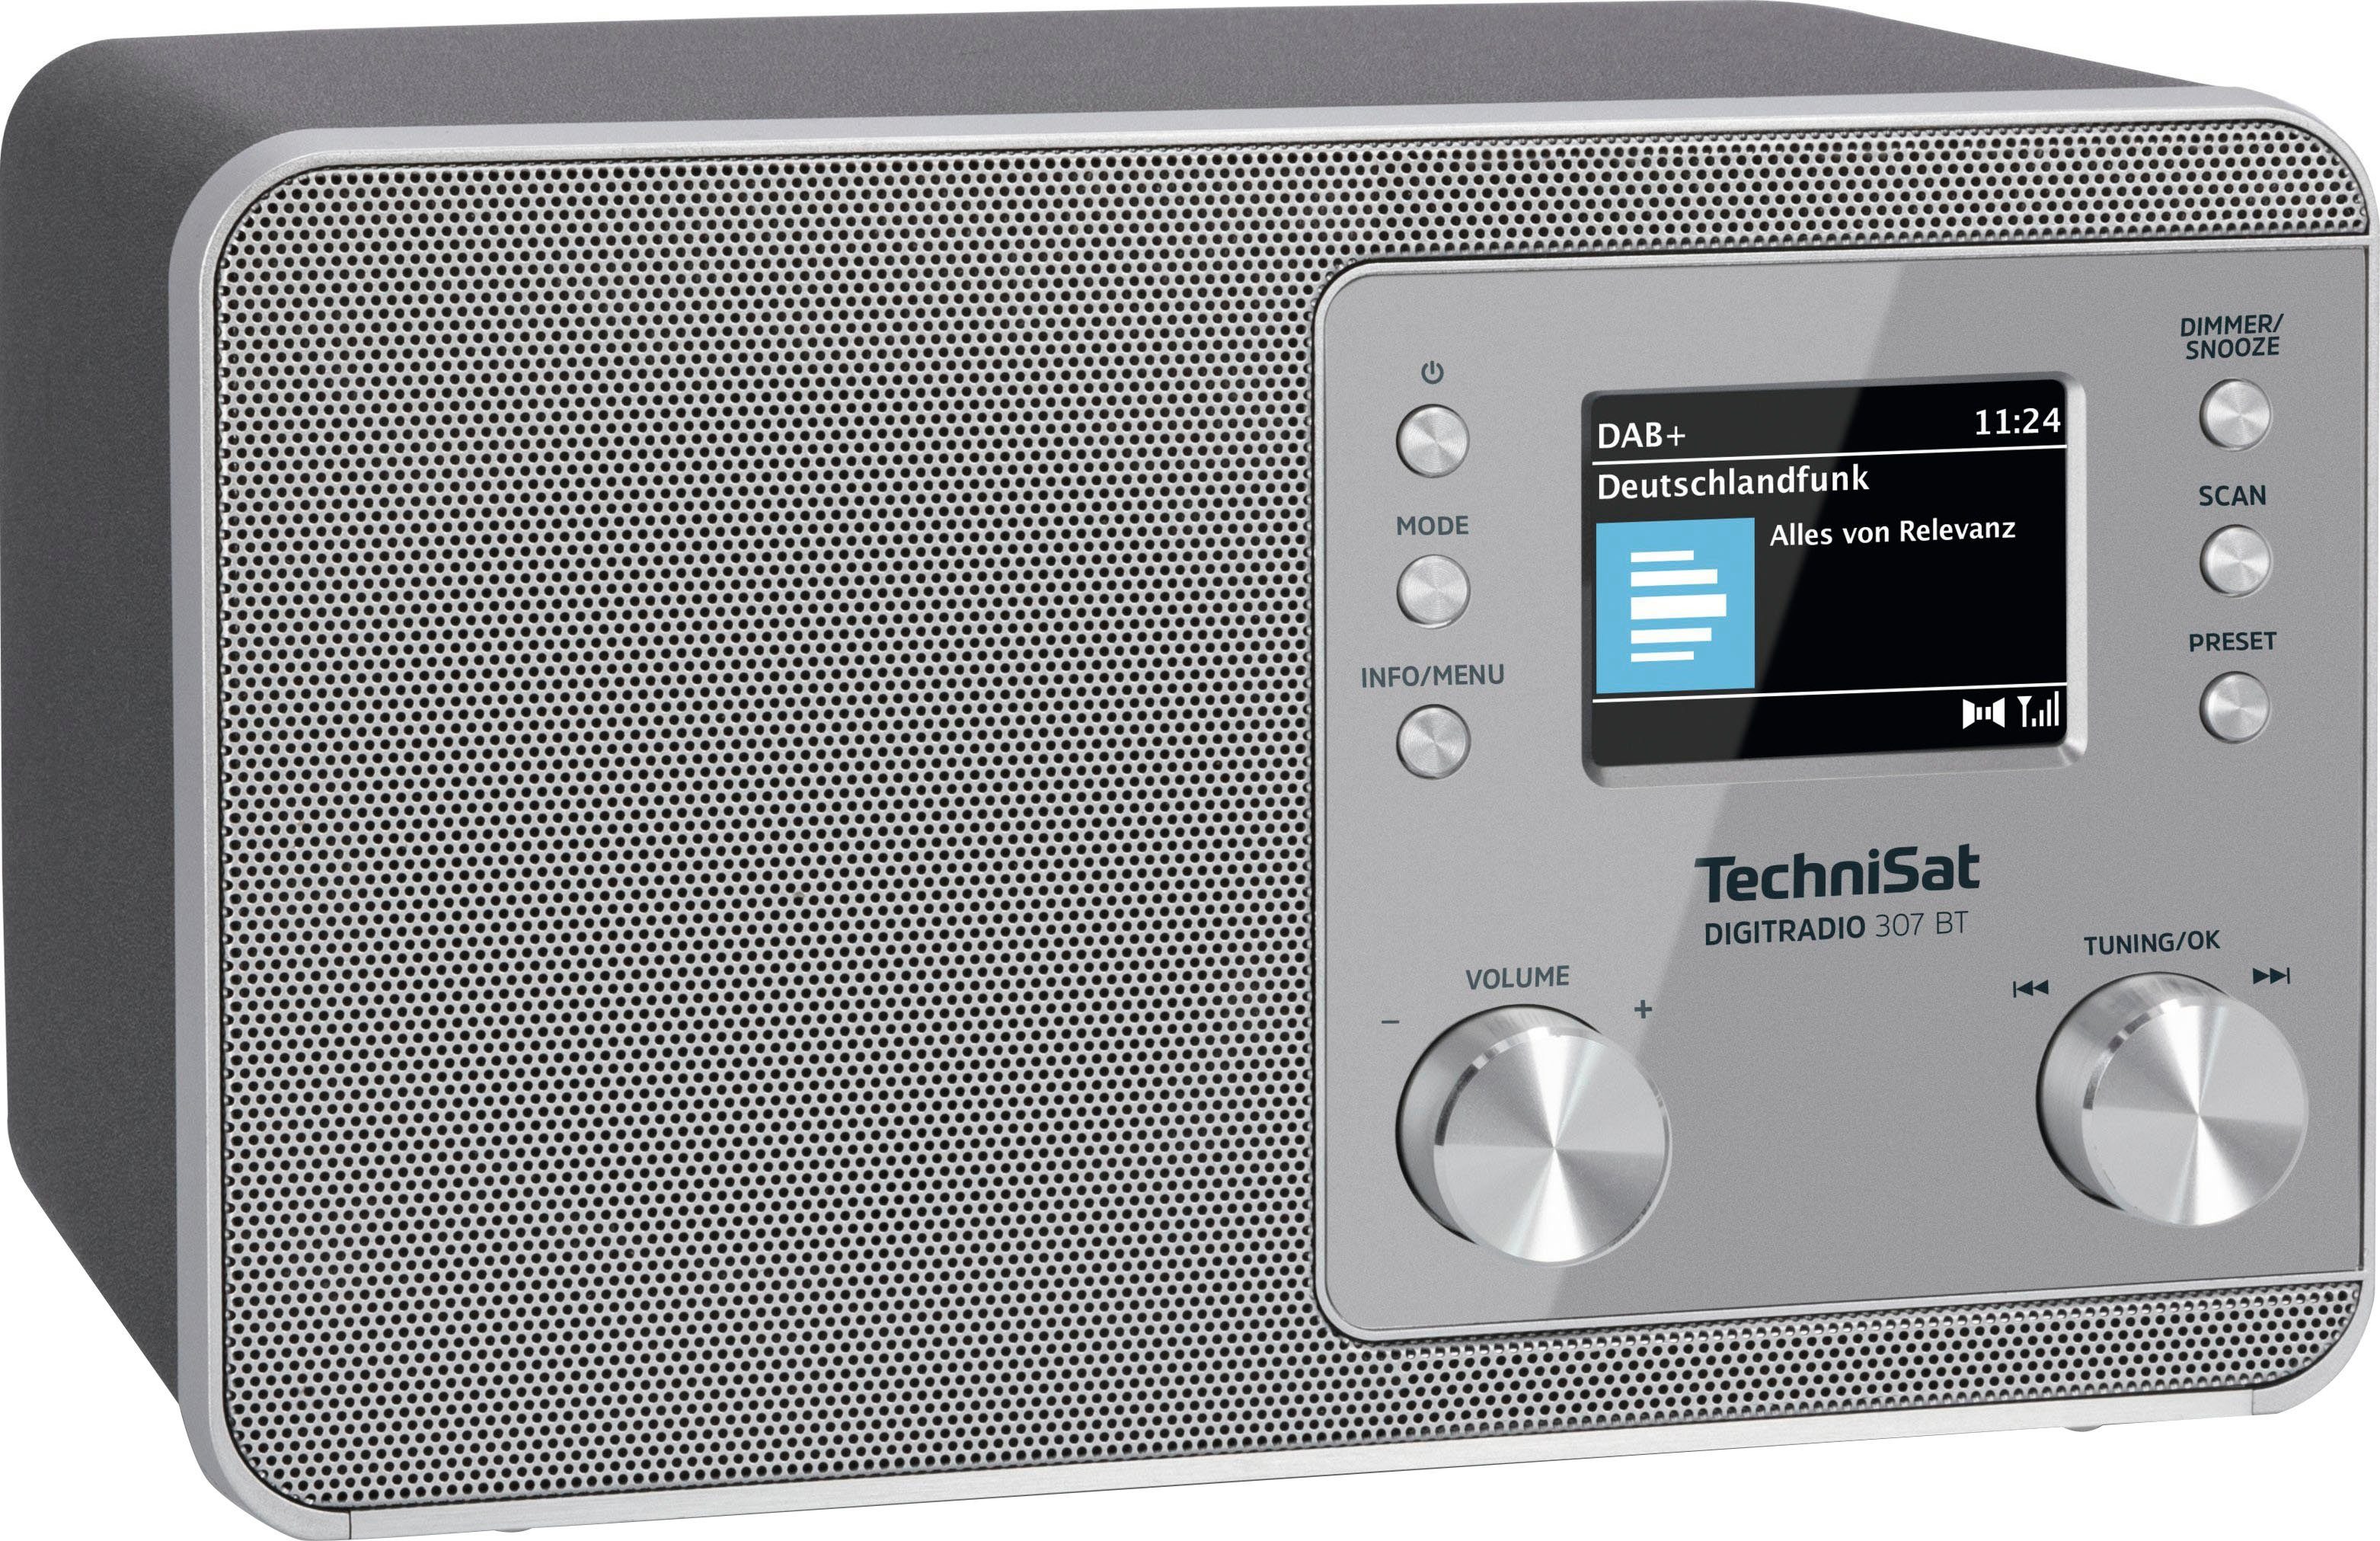 TechniSat DIGITRADIO 307 BT Radio (Digitalradio (DAB), UKW mit RDS, 5 W) Silber